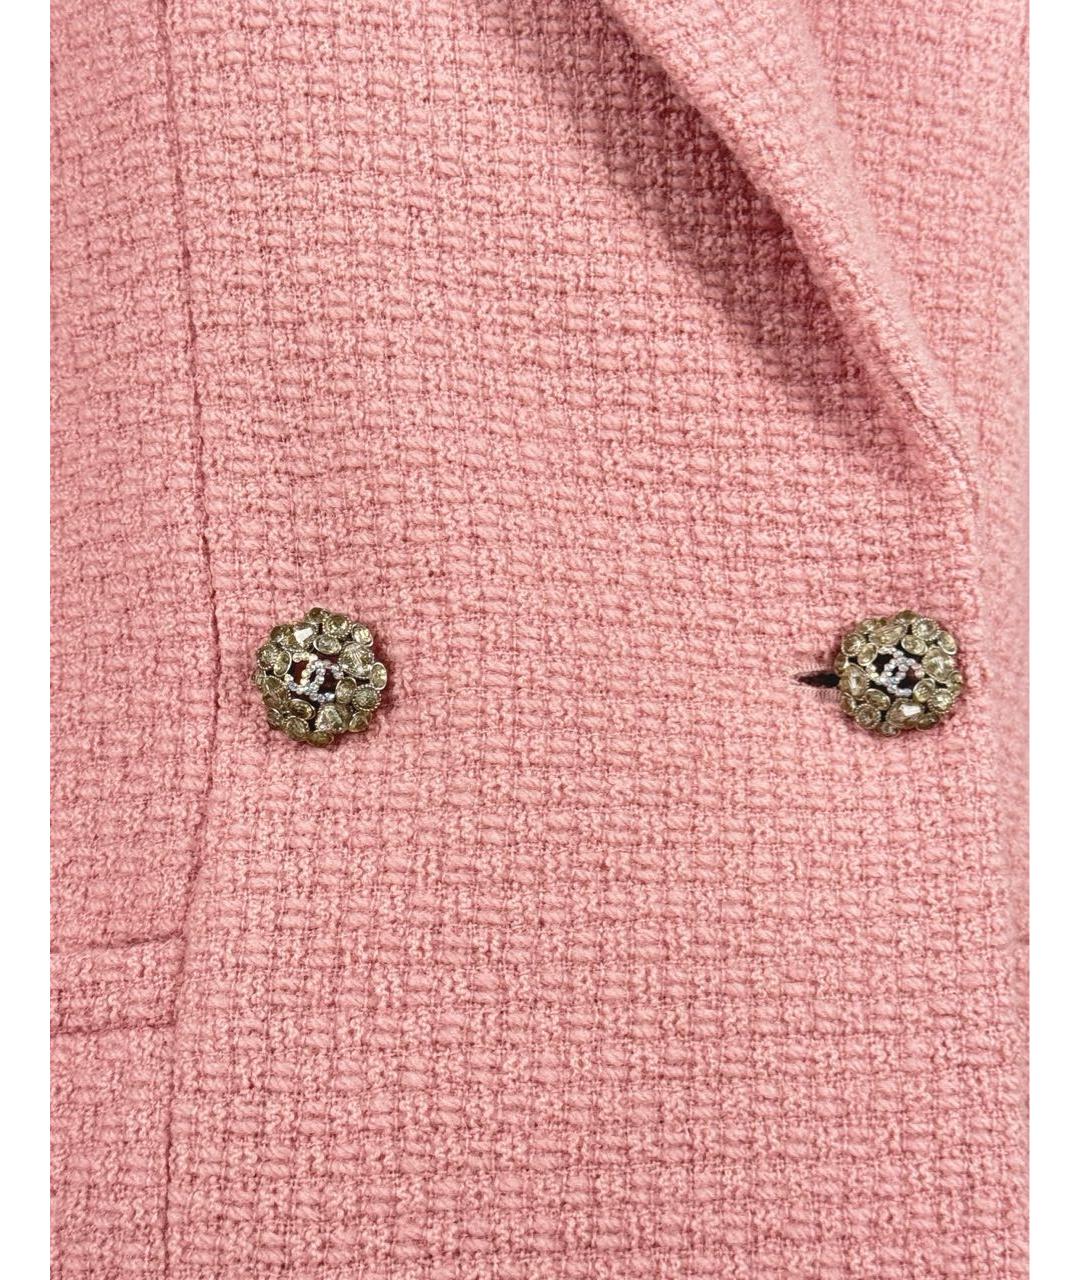 CHANEL PRE-OWNED Розовый твидовый жакет/пиджак, фото 7